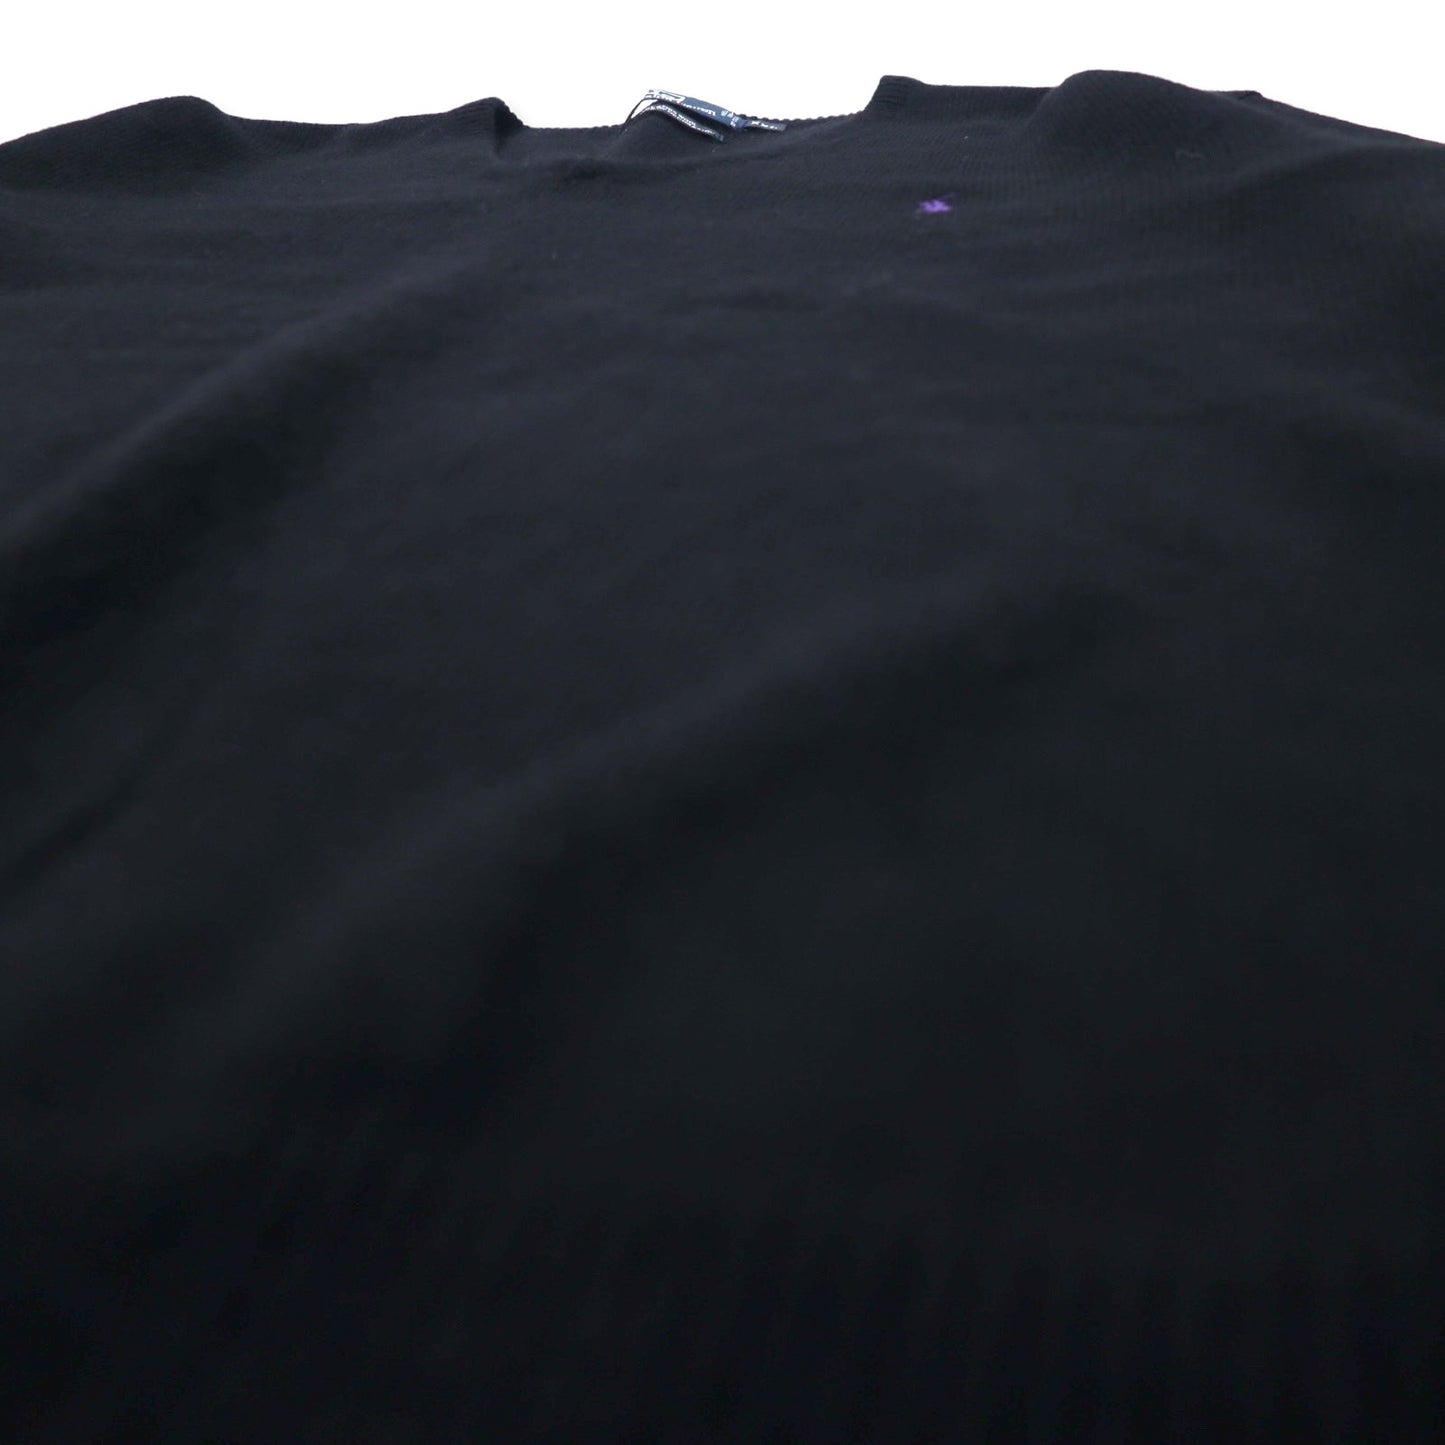 Polo by Ralph Lauren Vネック ニット セーター XXL ブラック ラムウール スモールポニー刺繍 ビッグサイズ